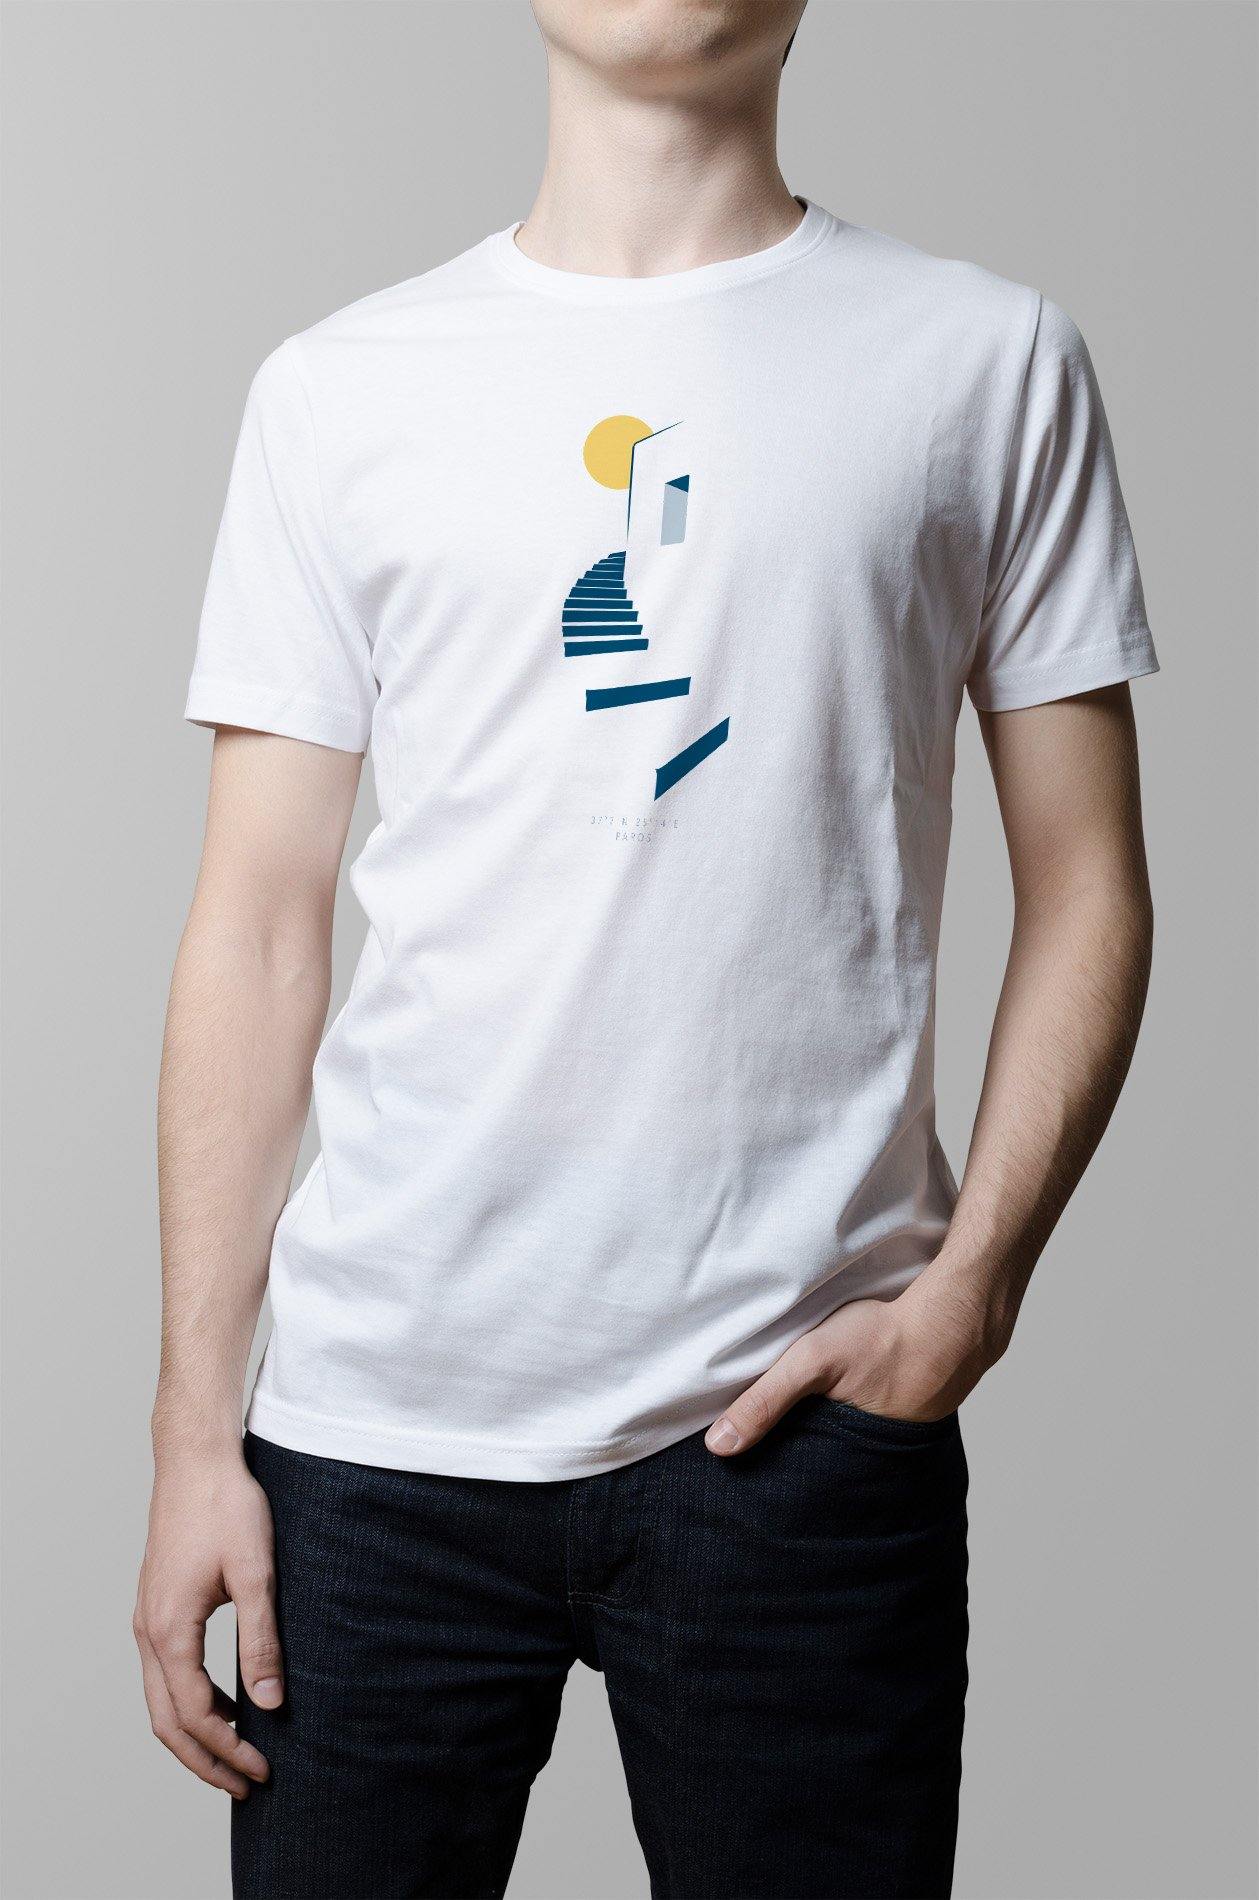 Cycladic Stairs T-Shirt - YOU & ISLAND